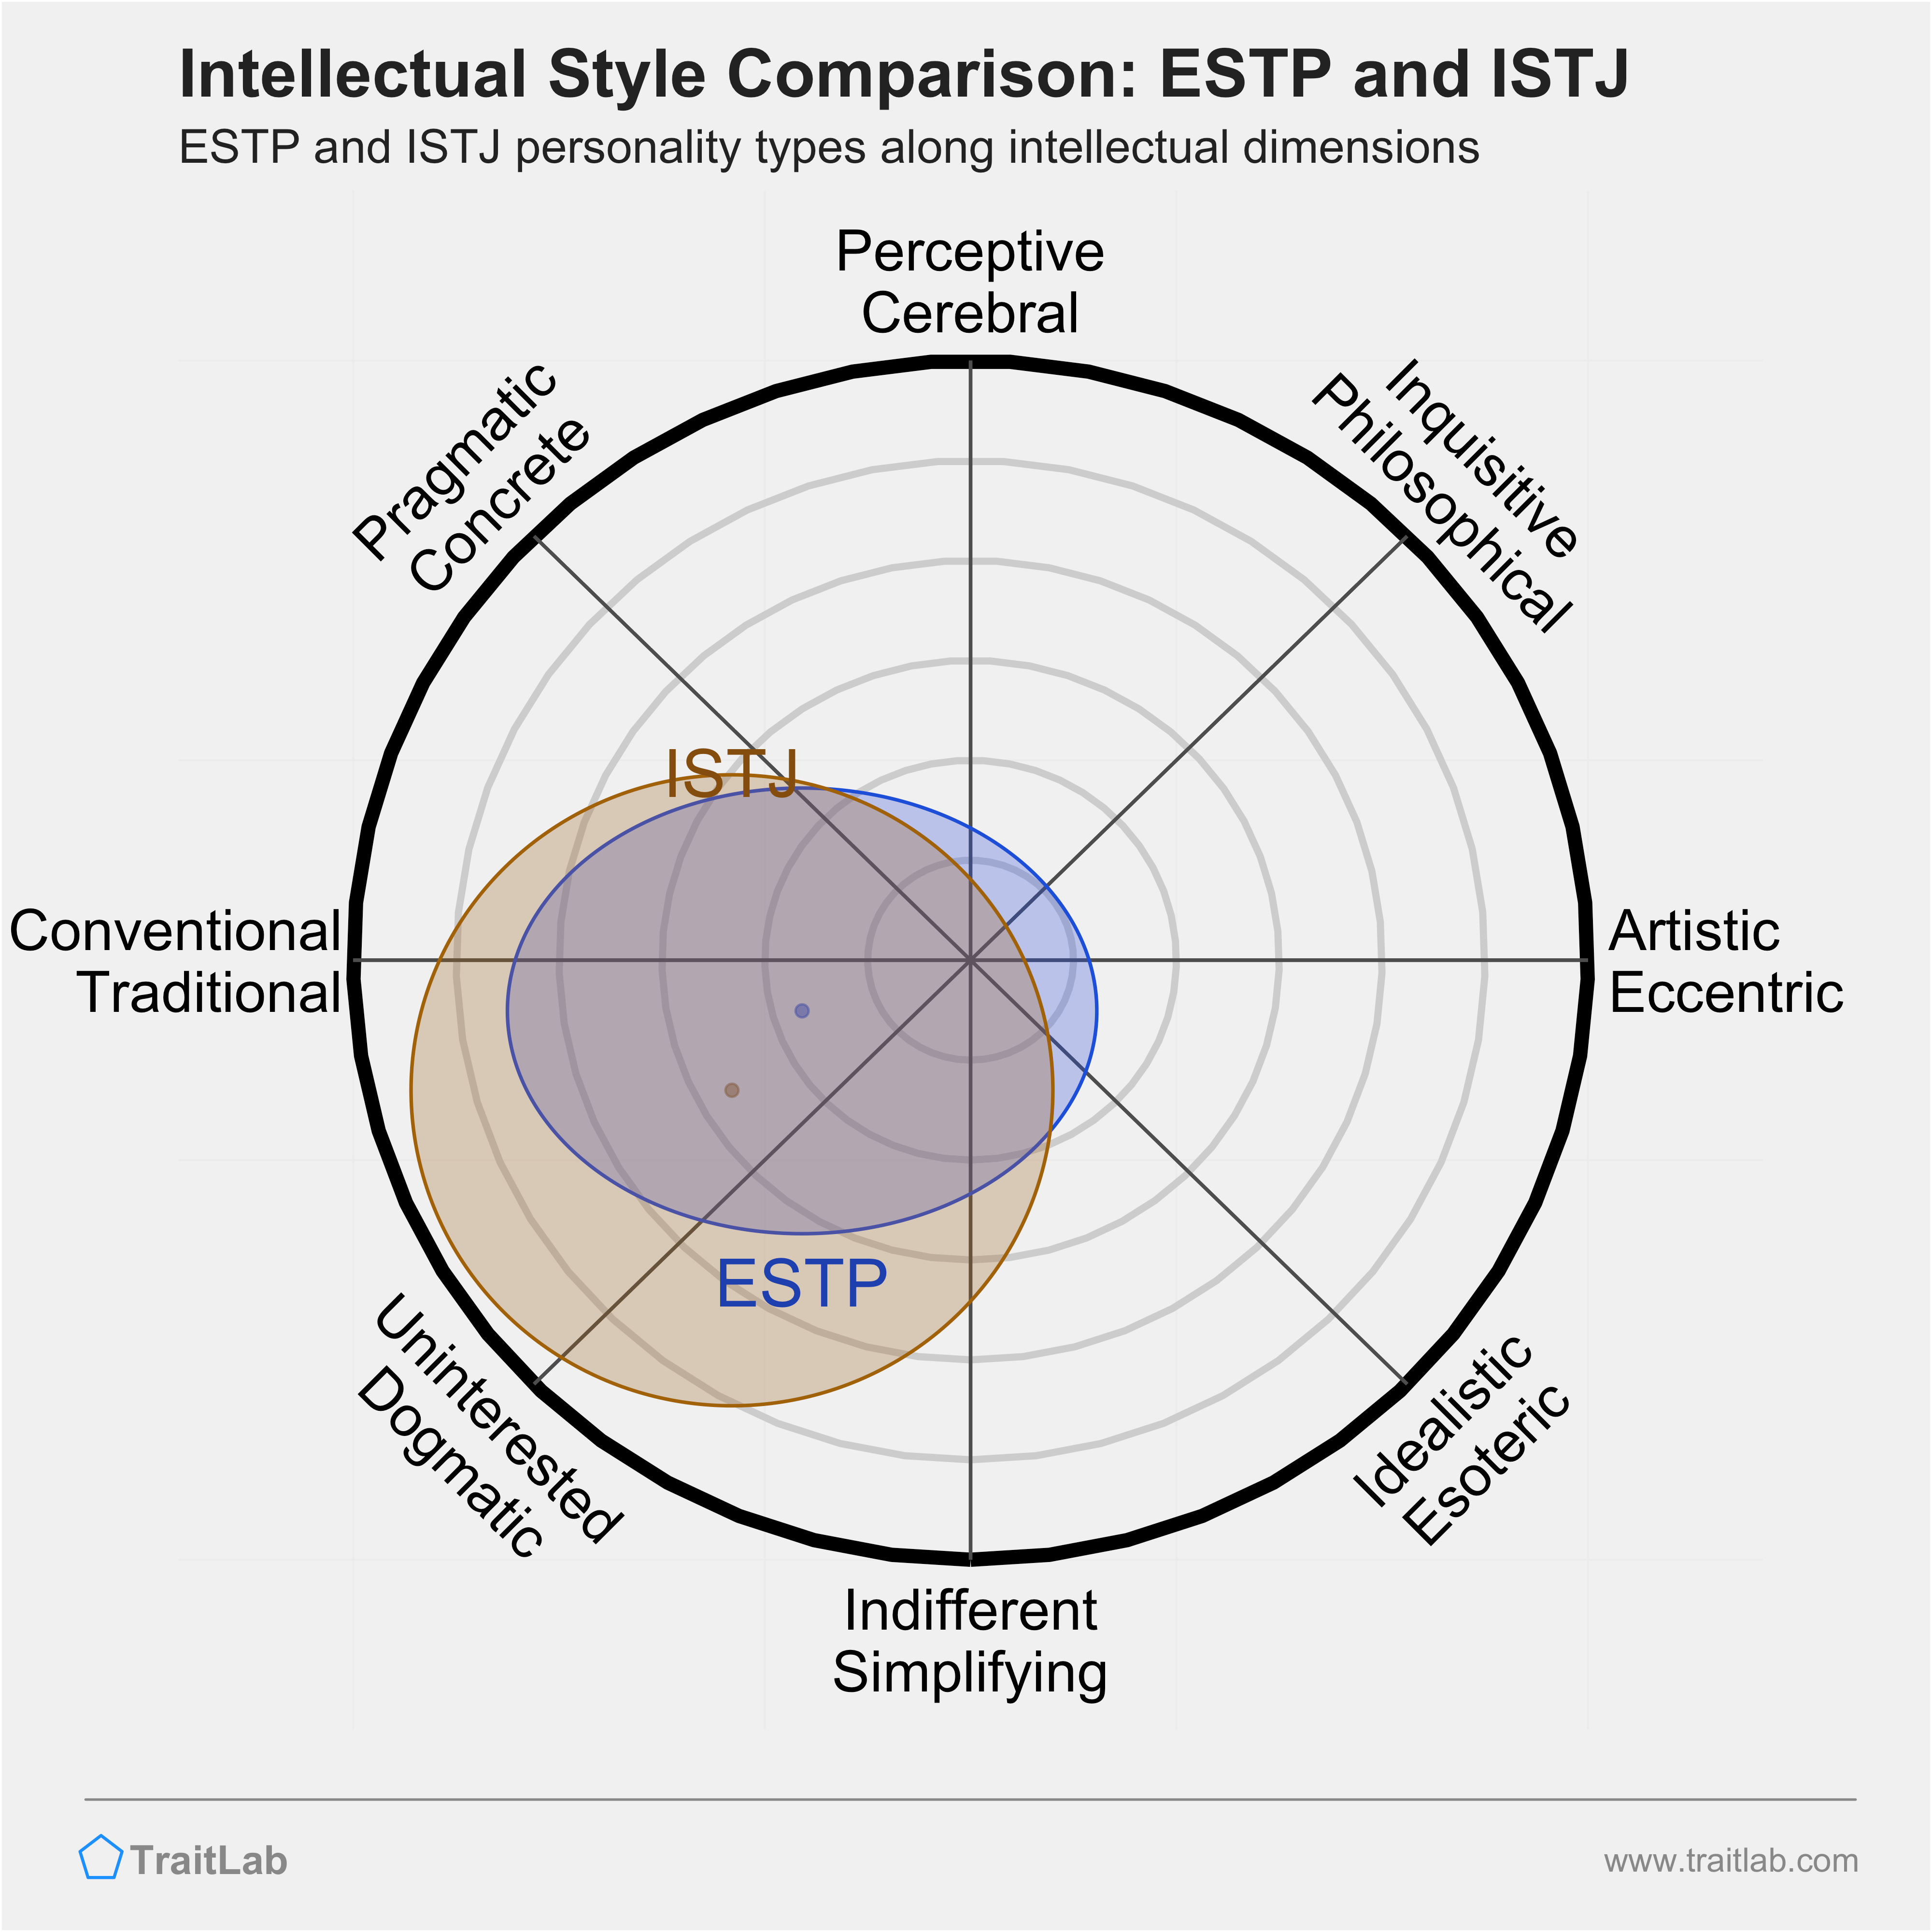 ESTP and ISTJ comparison across intellectual dimensions